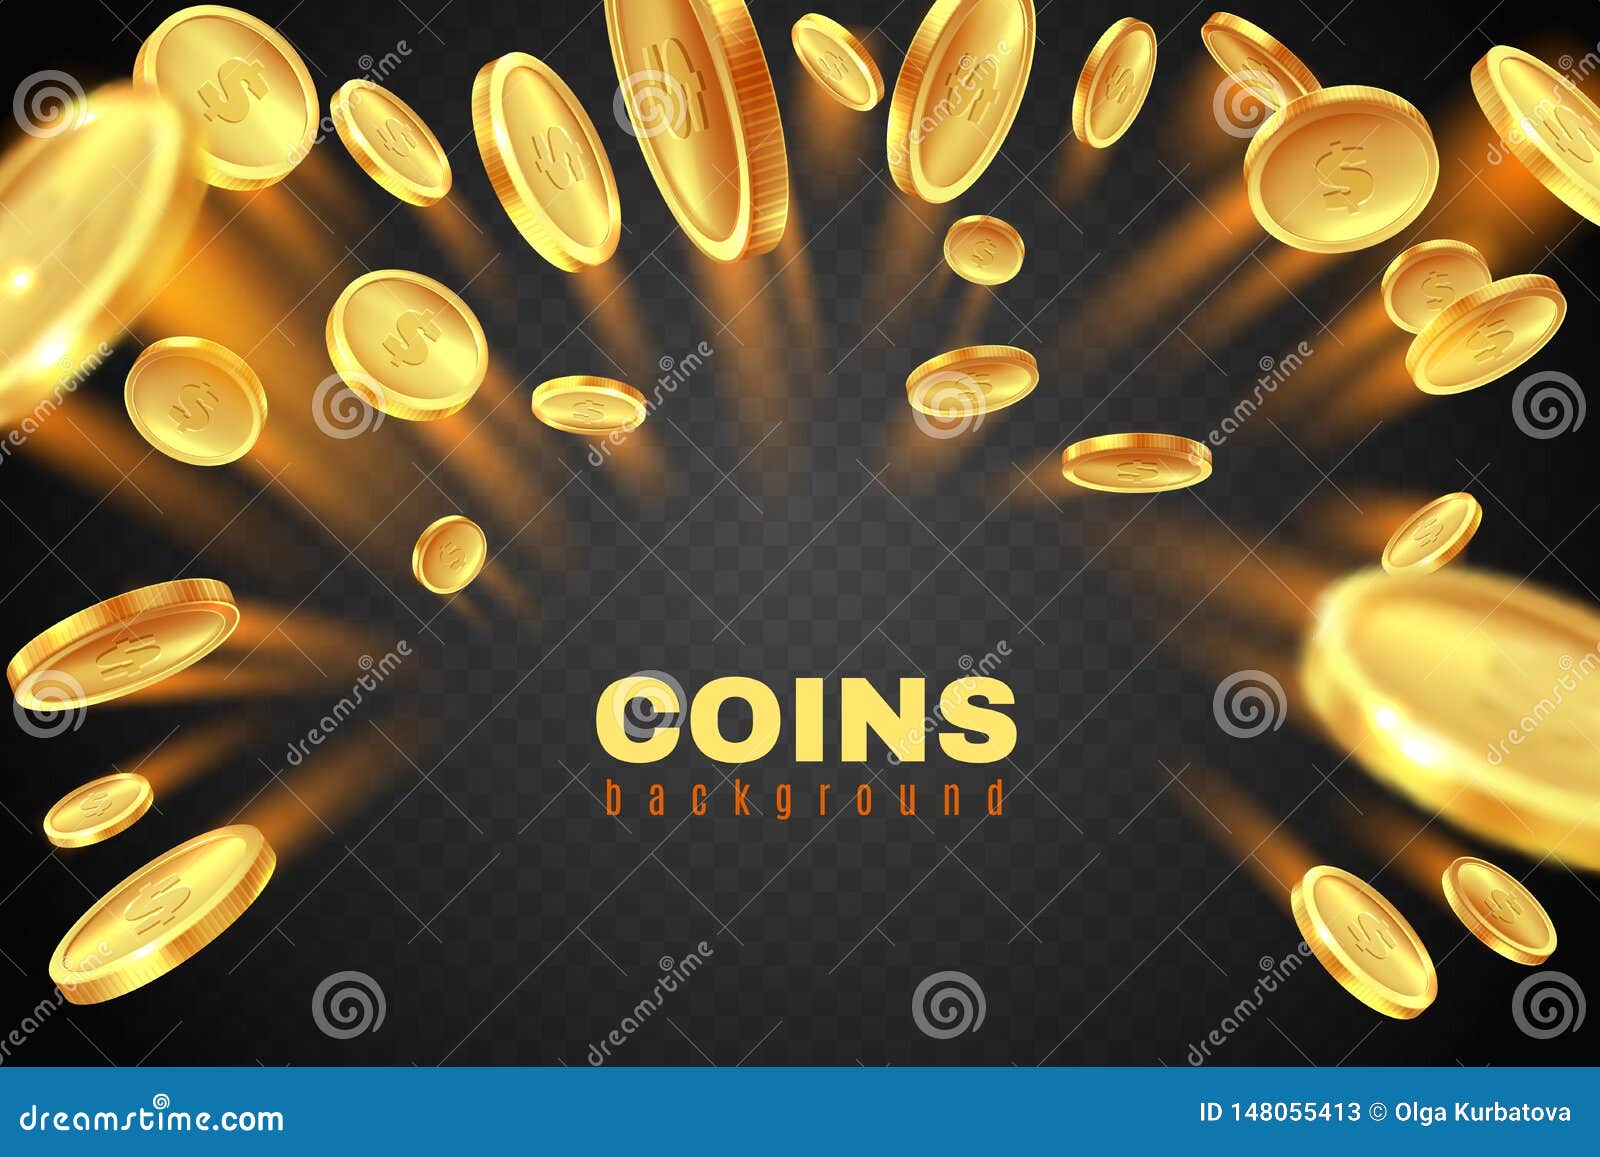 gold coin explosion. golden dollar coins rain. game prize money splash. casino jackpot  concept  on black